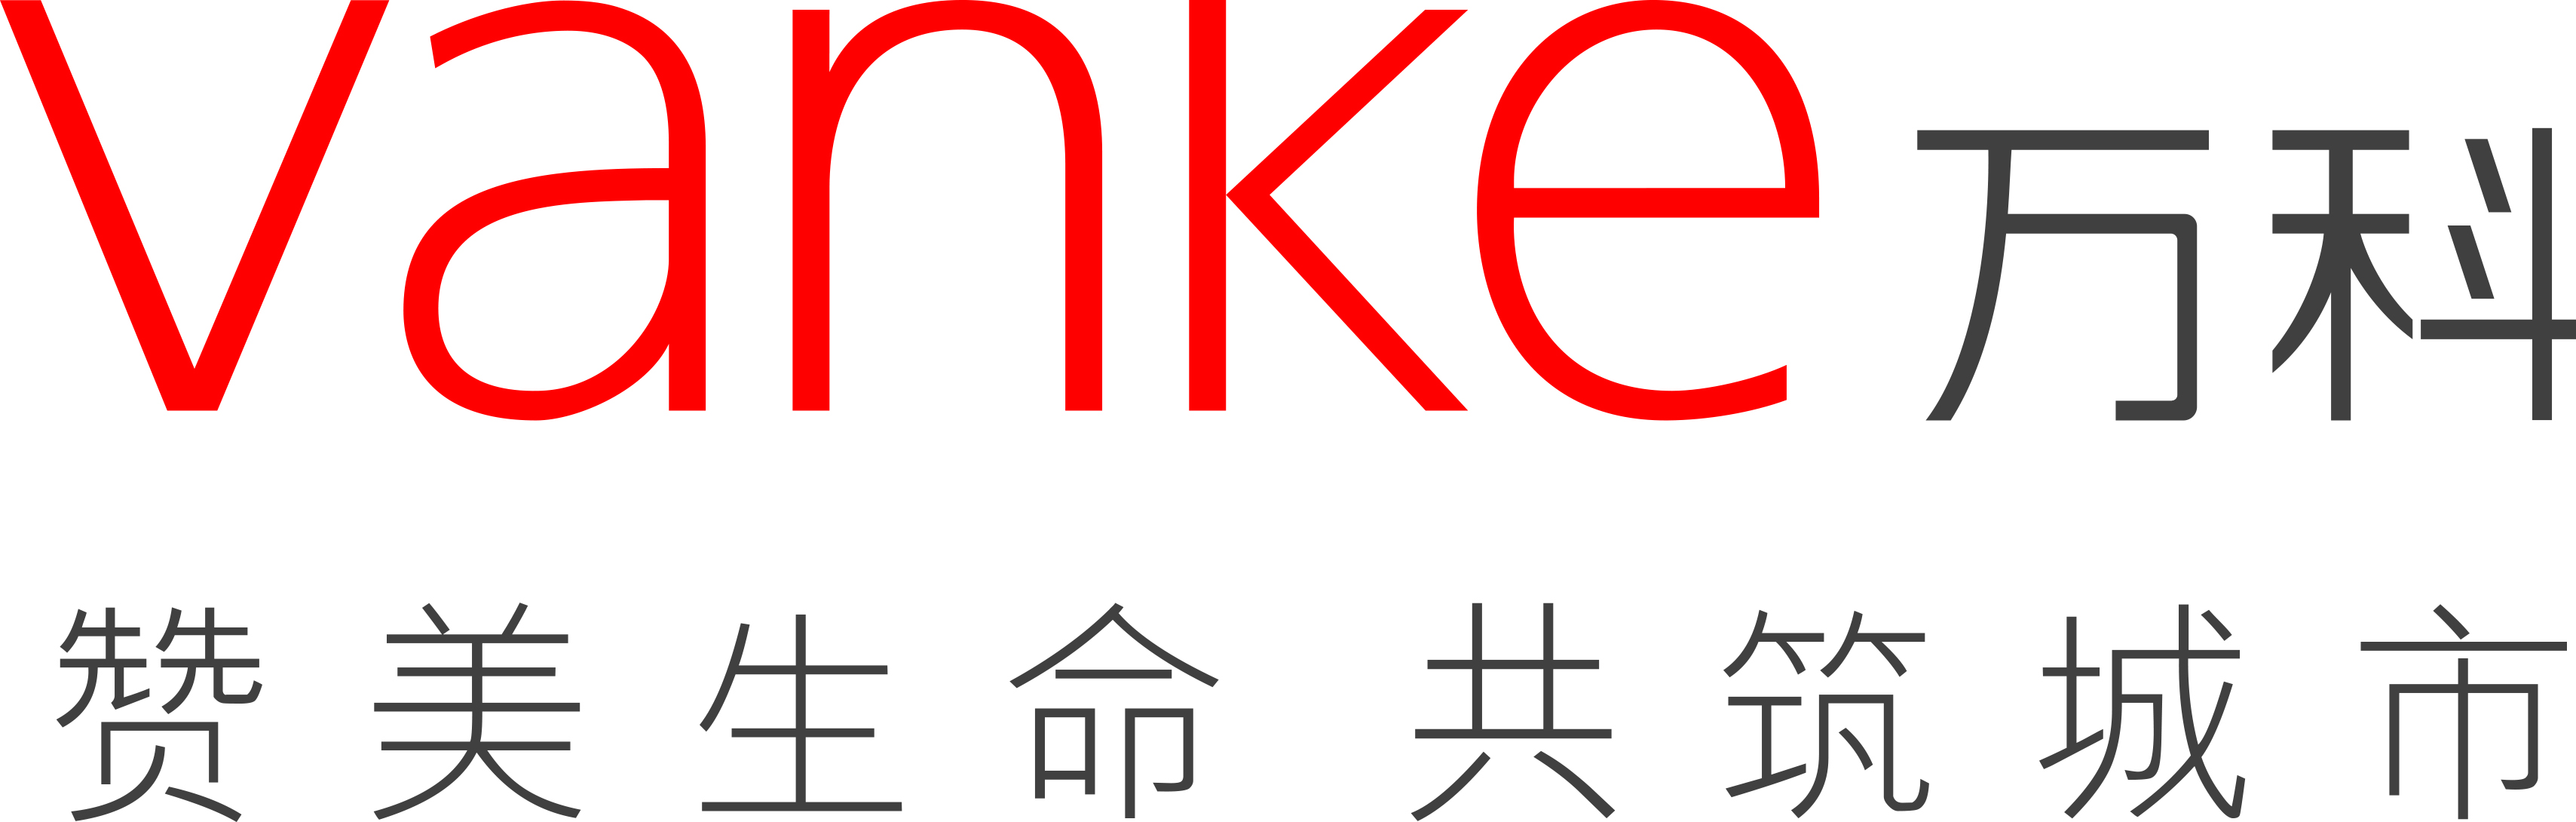 China Vanke Brand Logo